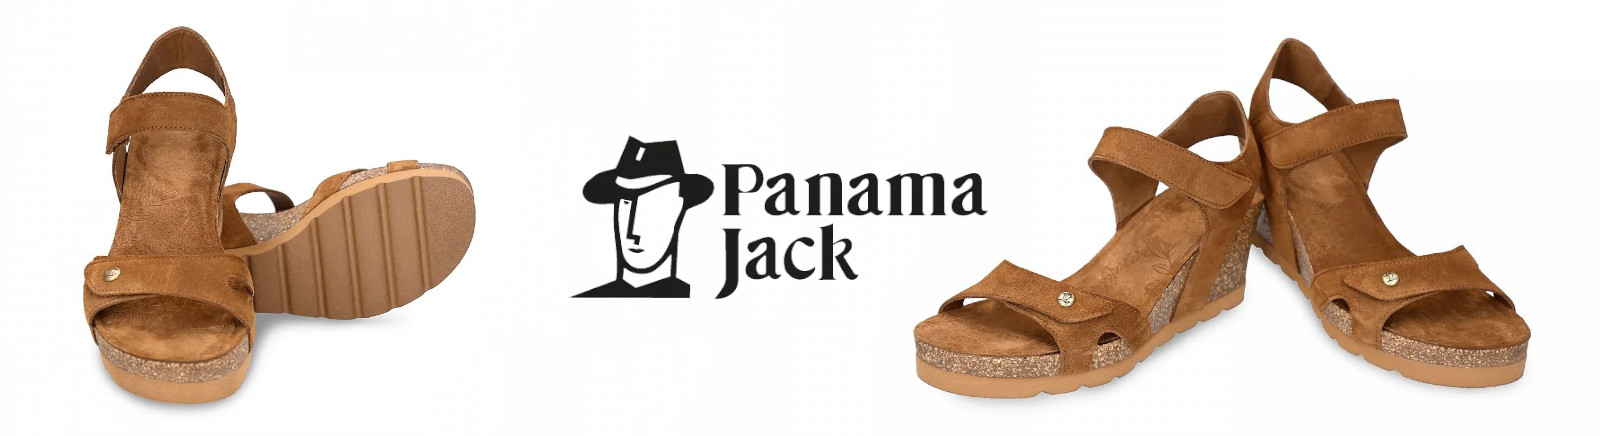 Prange: Panama Jack Pantoletten für Herren online shoppen